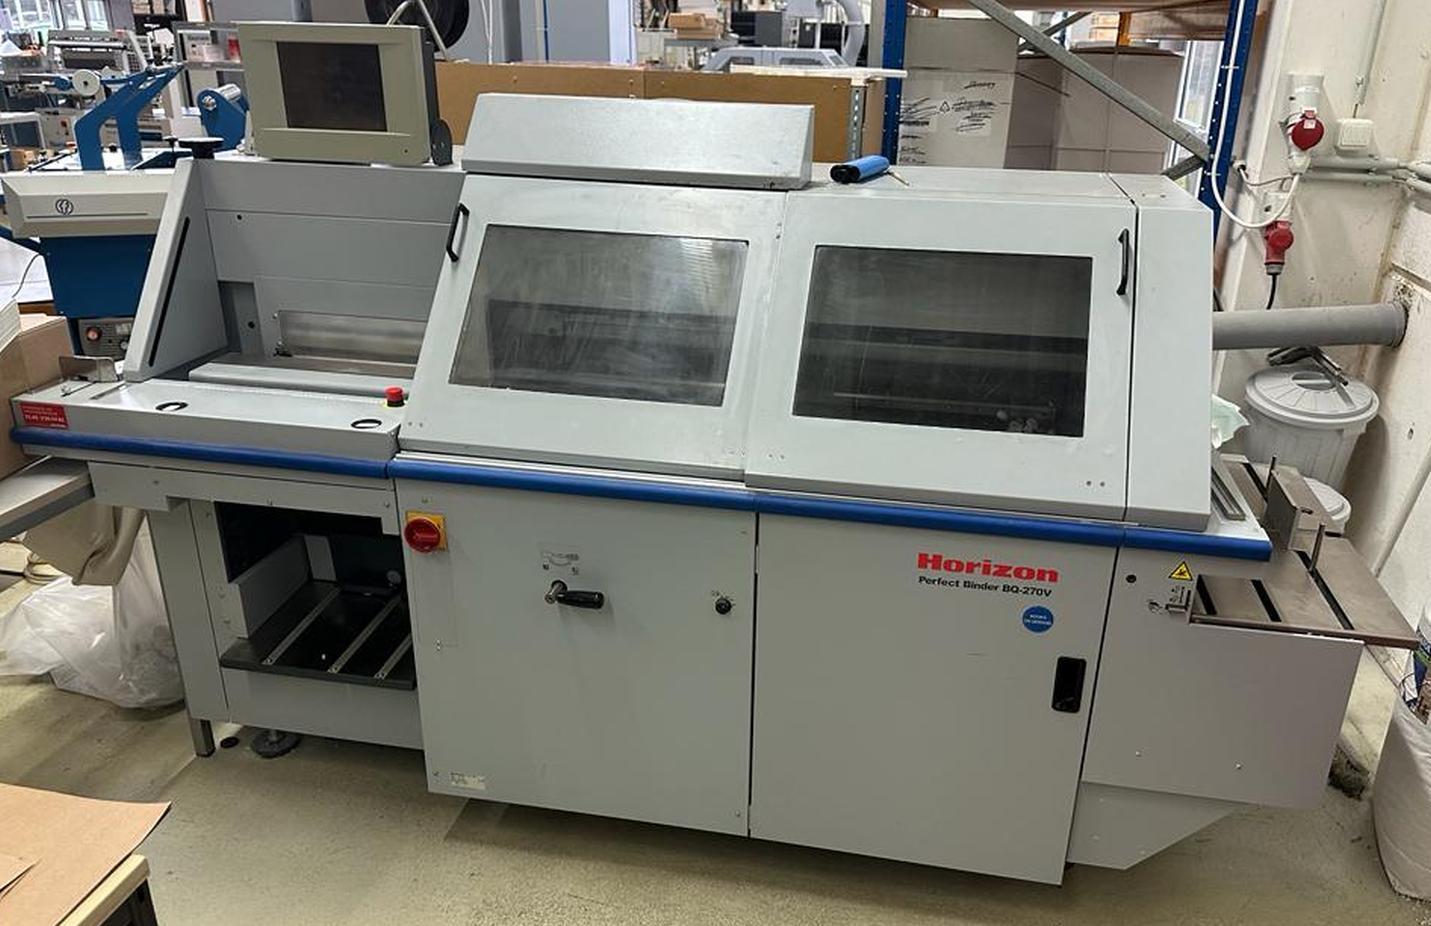 Horizon BQ-270-V Small perfect binder Used Machinery for sale